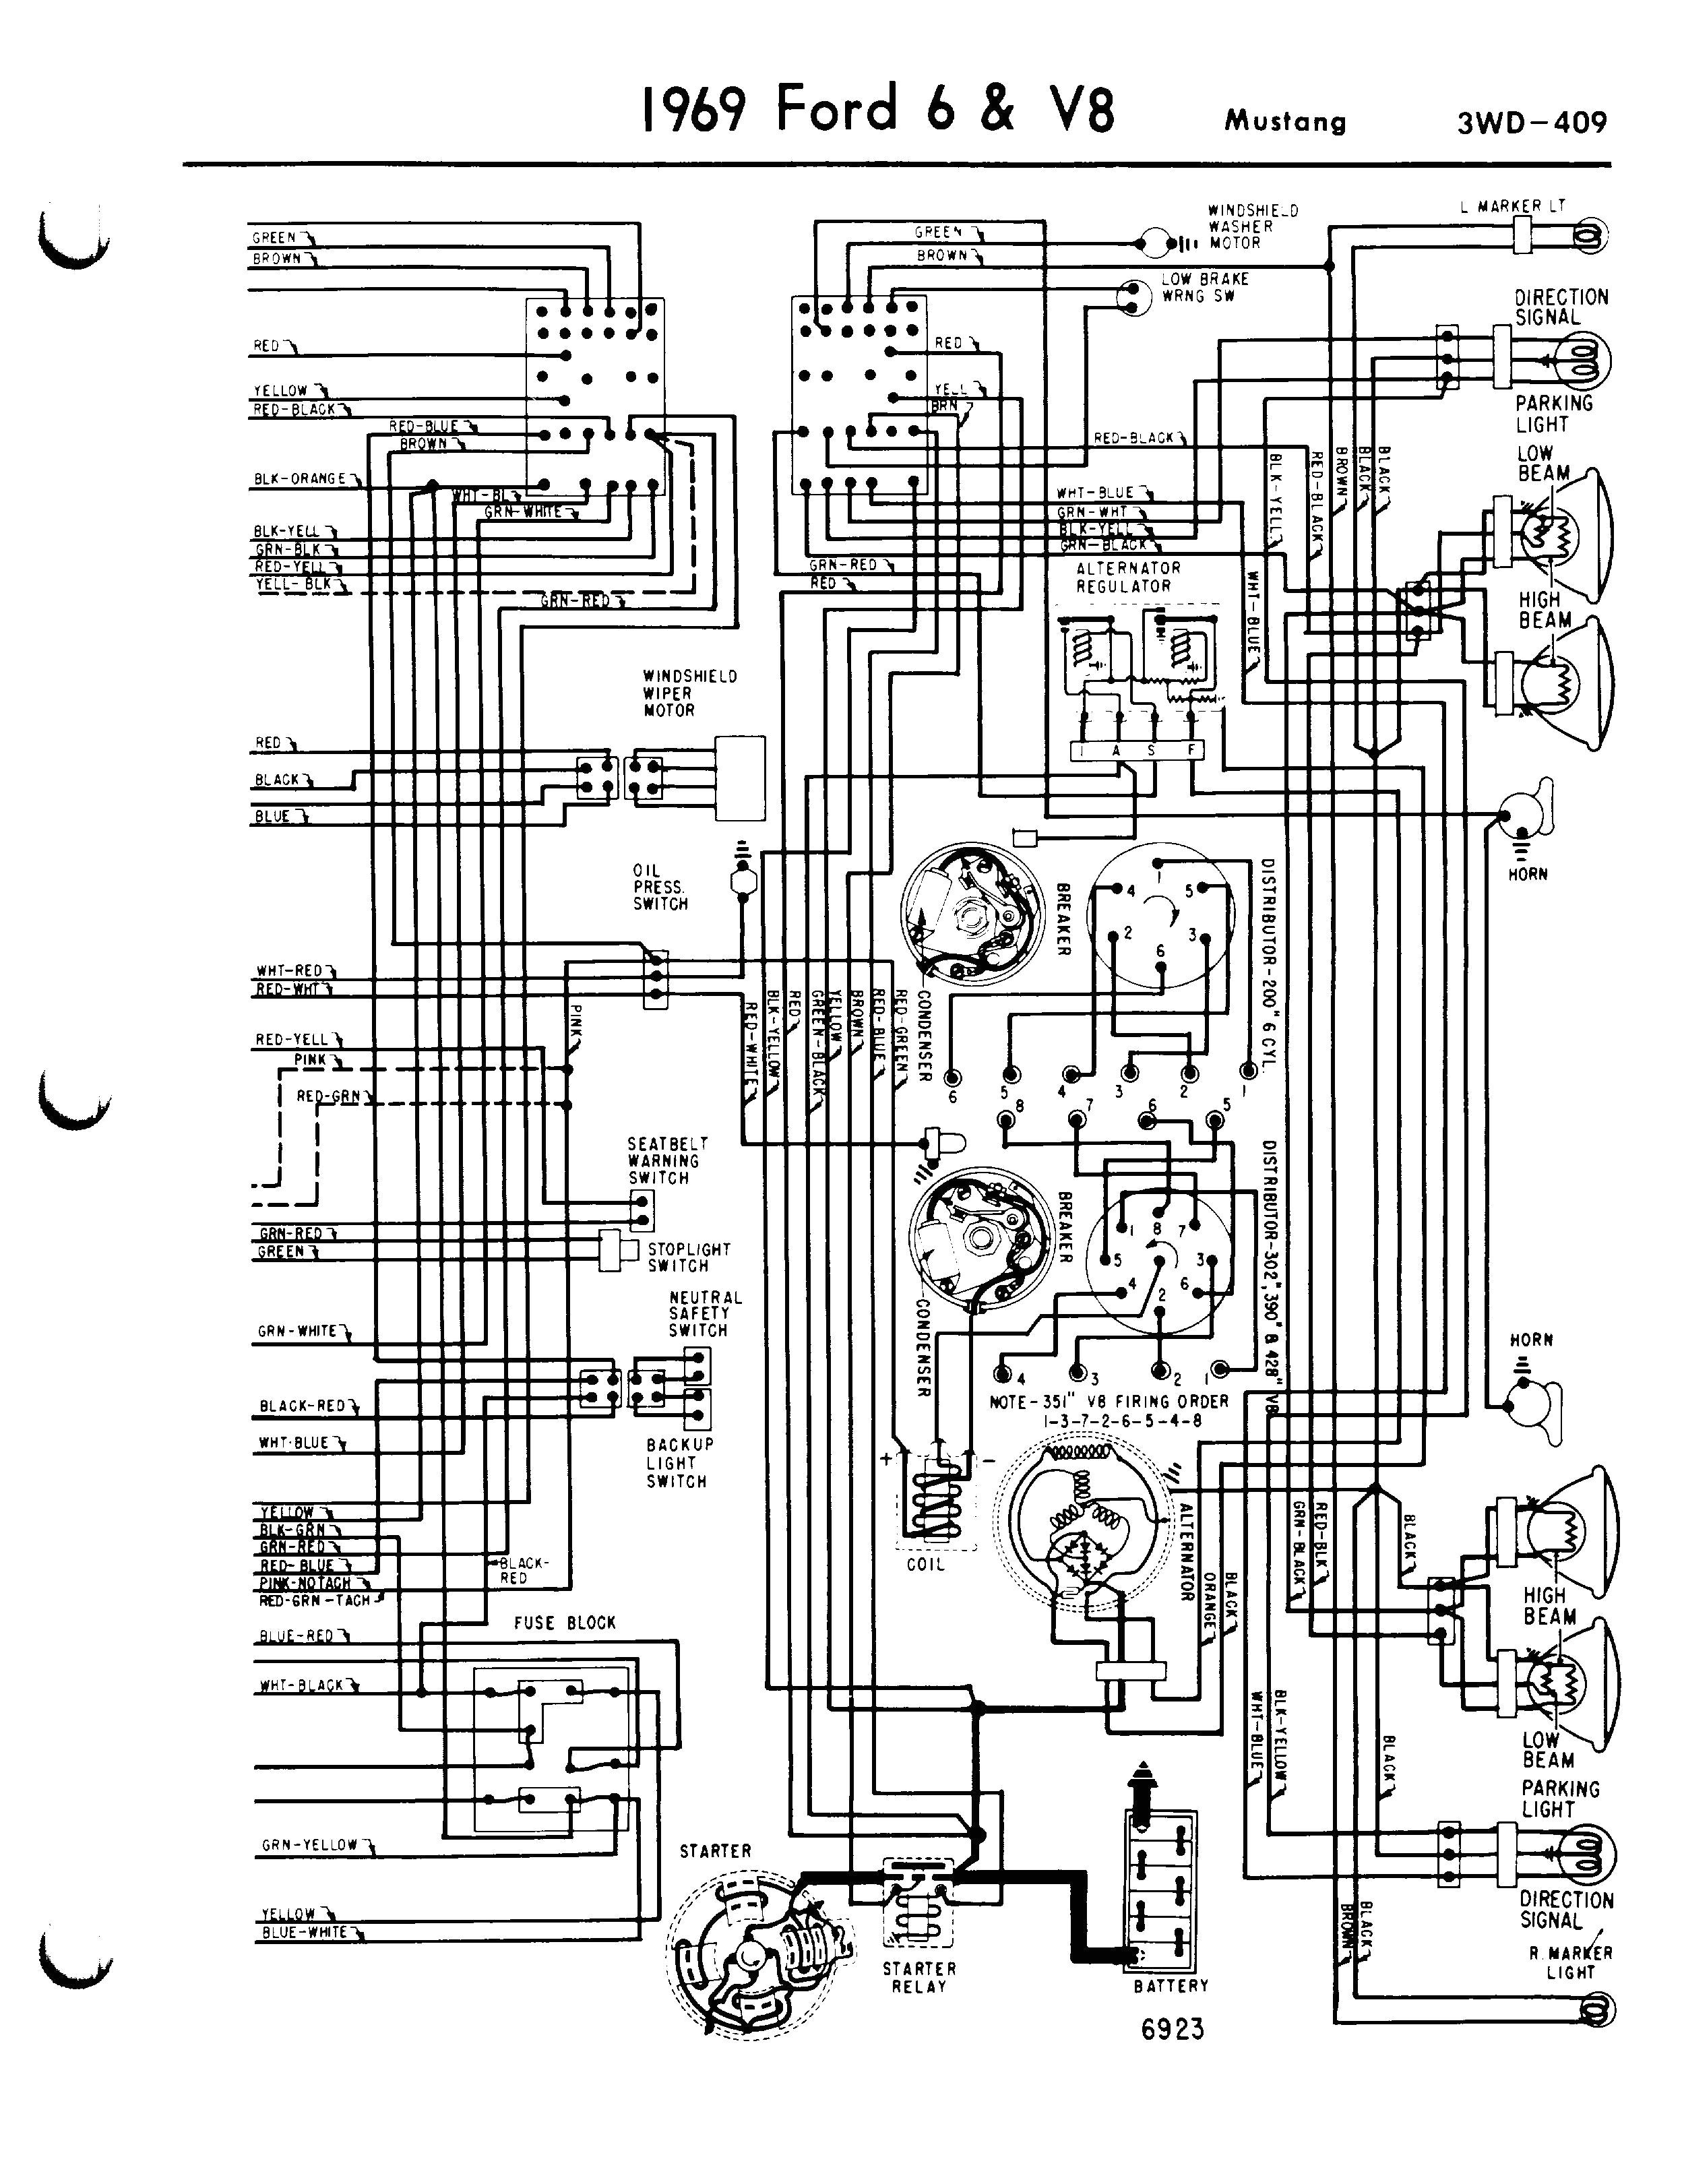 1972 mustang wiring diagram color premium wiring diagram blog 1972 mustang wiring diagram color